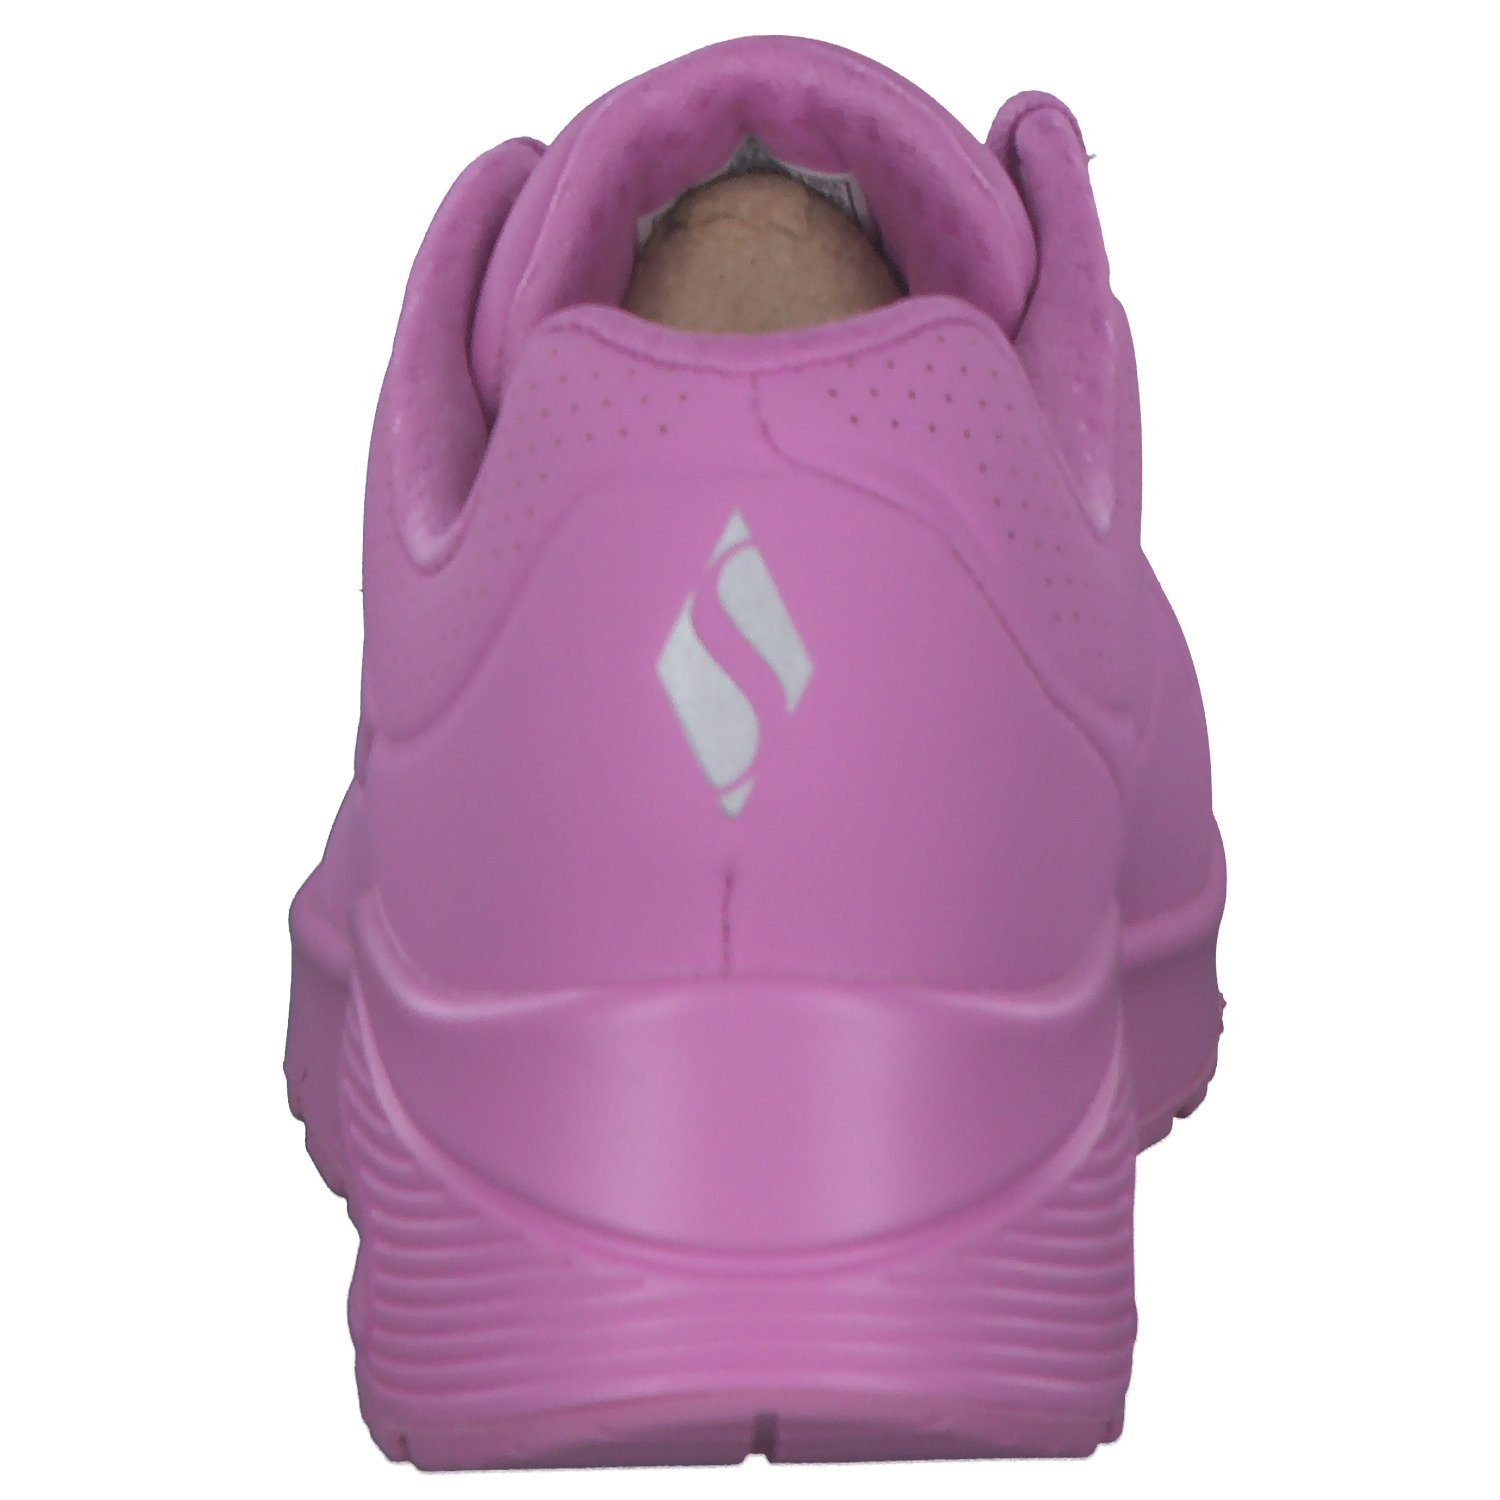 (20203090) Uno pink Sneaker 73690 Skechers Stand On Skechers Air